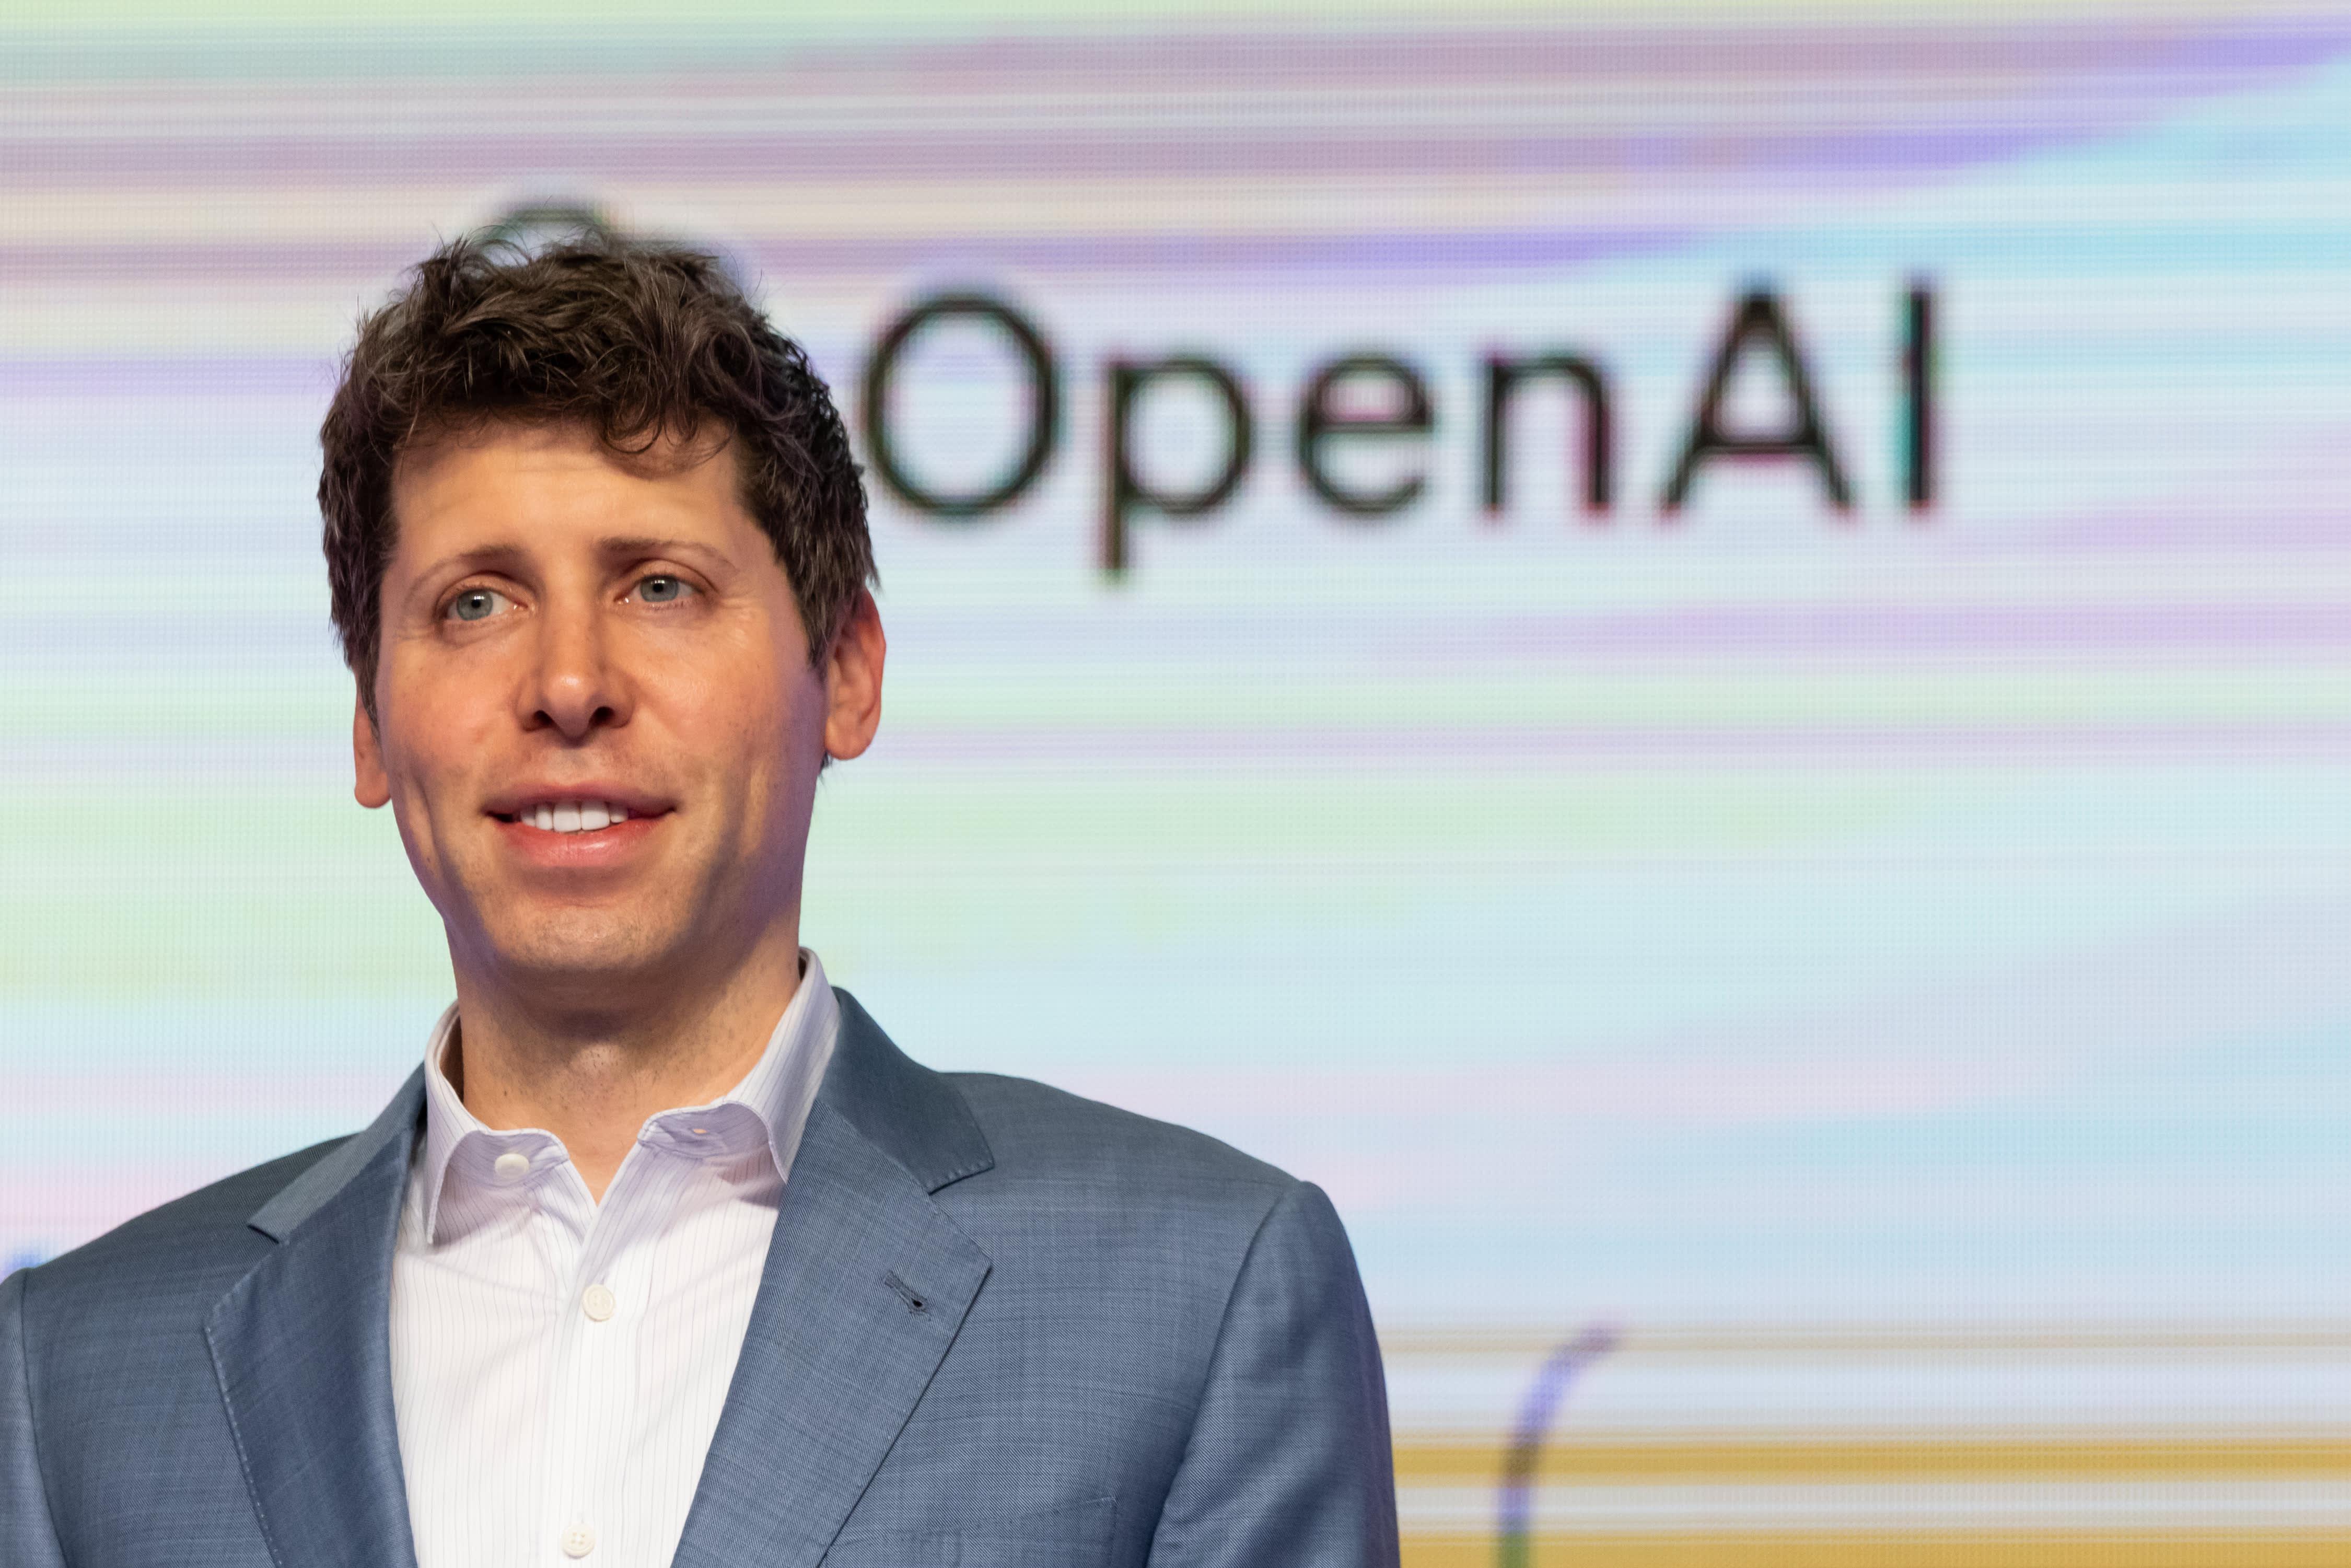 Microsoft Brings on Board Sam Altman, Co-Founder of OpenAI